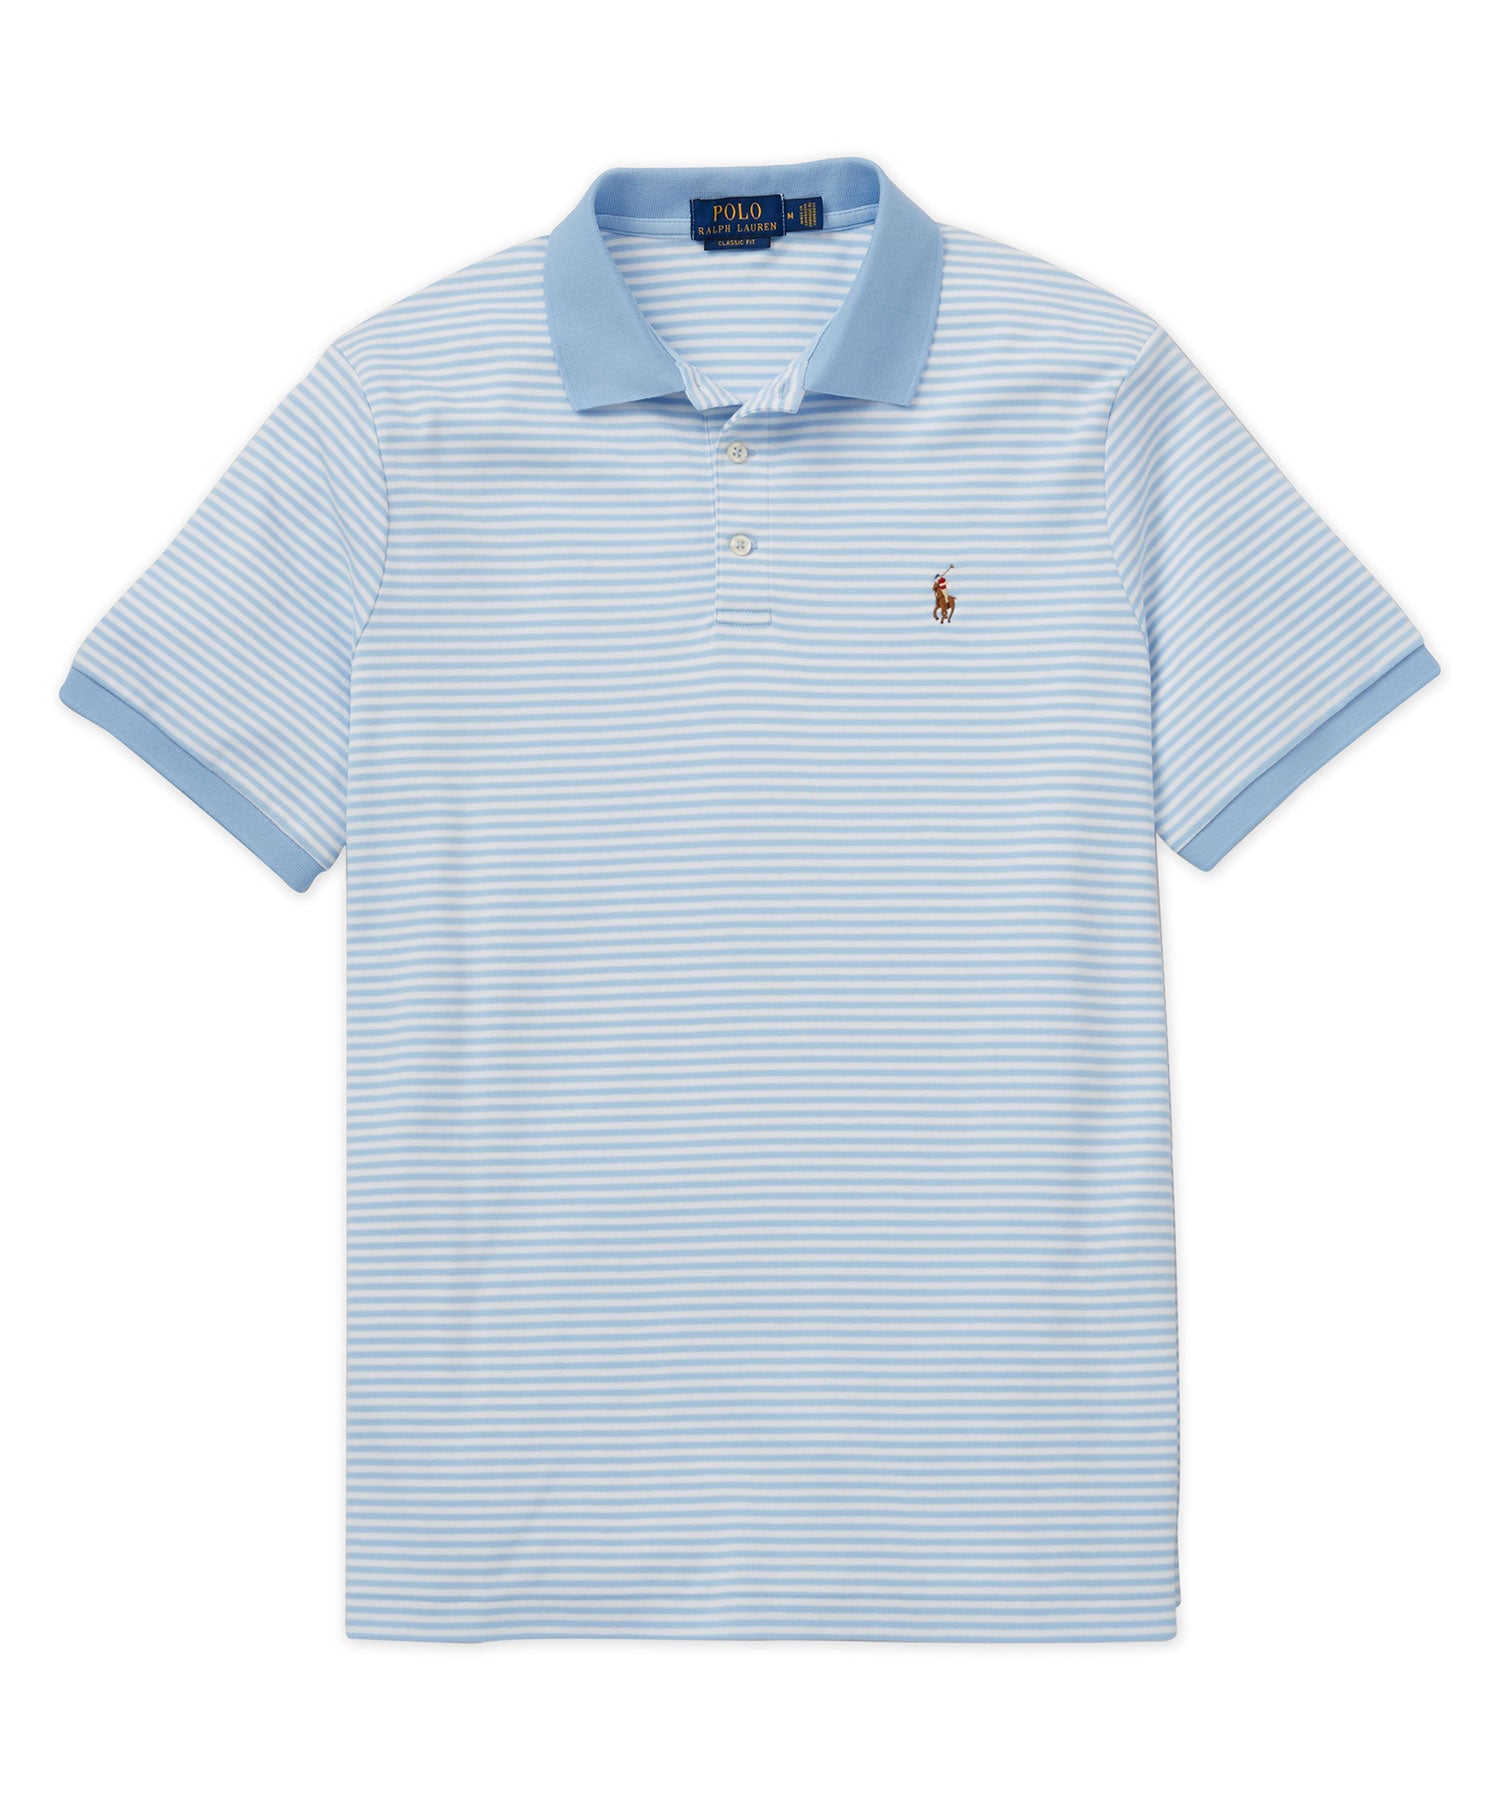 Lacoste – Chaussettes Golf Club Bleues